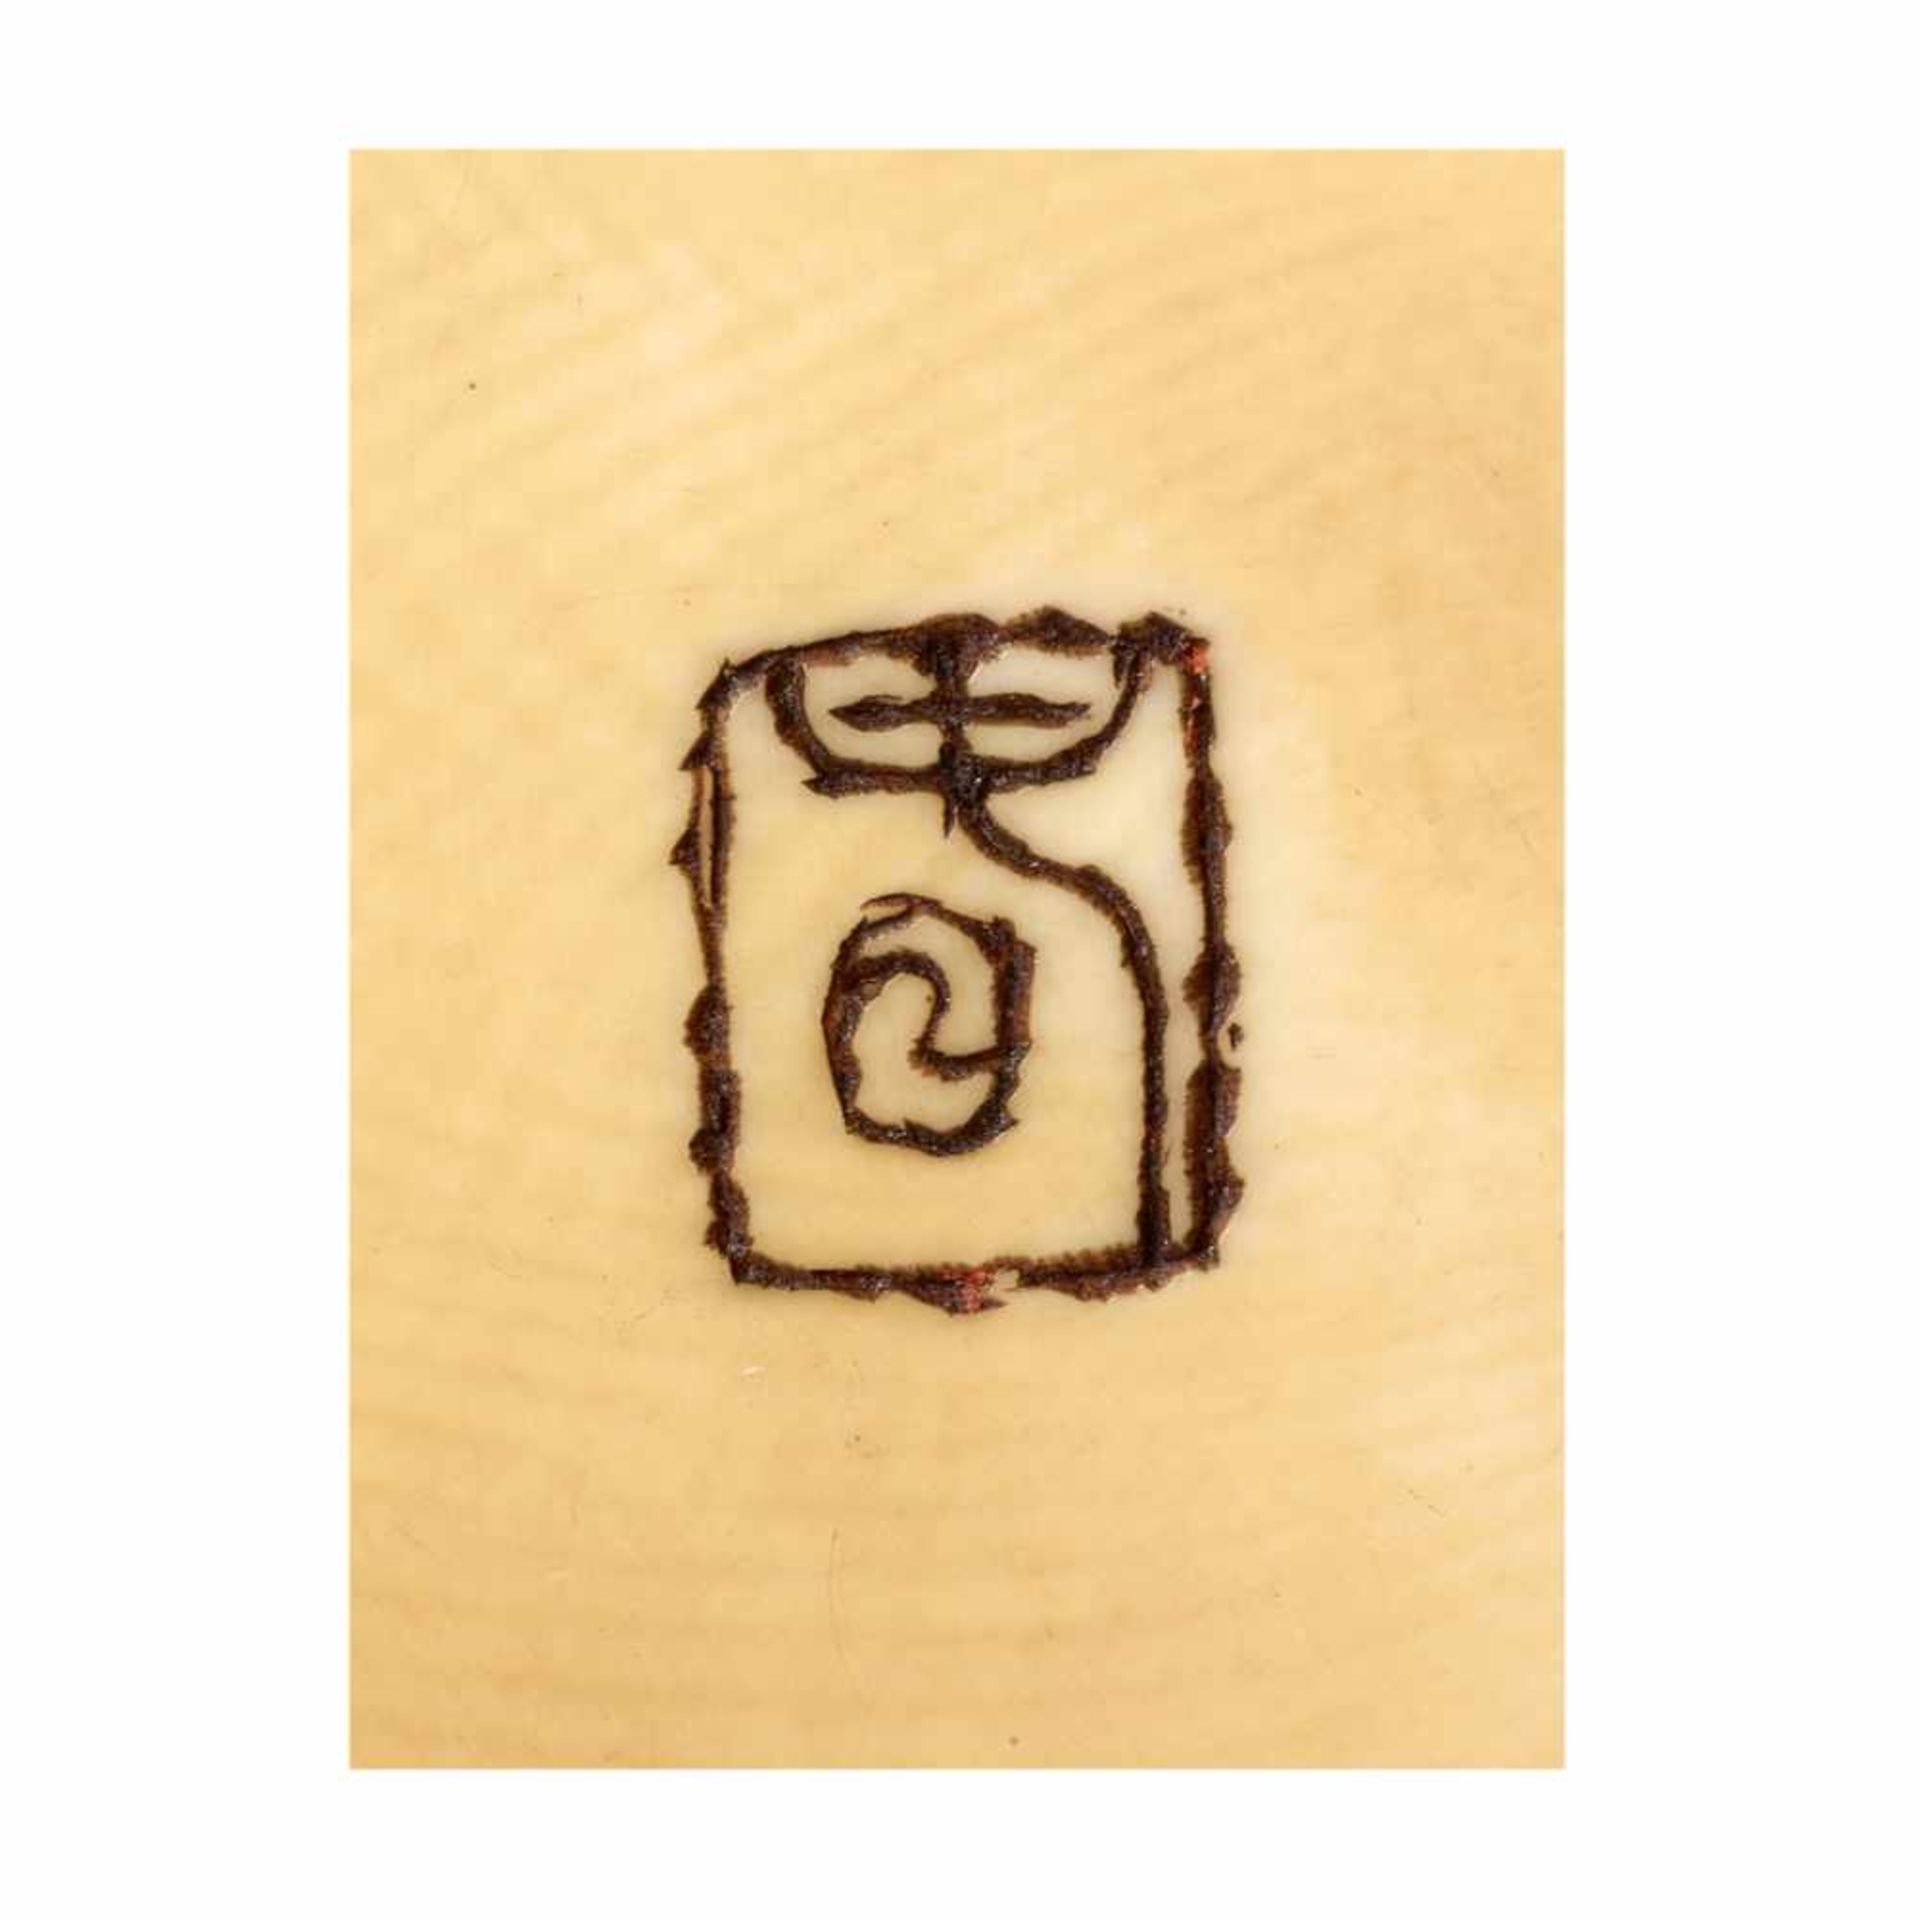 AN IVORY NETSUKE OKIMONO OF A BOY IN HOTEI’S BAGSigned in seal form Tanaka, ivory netsuke- - Image 8 of 8